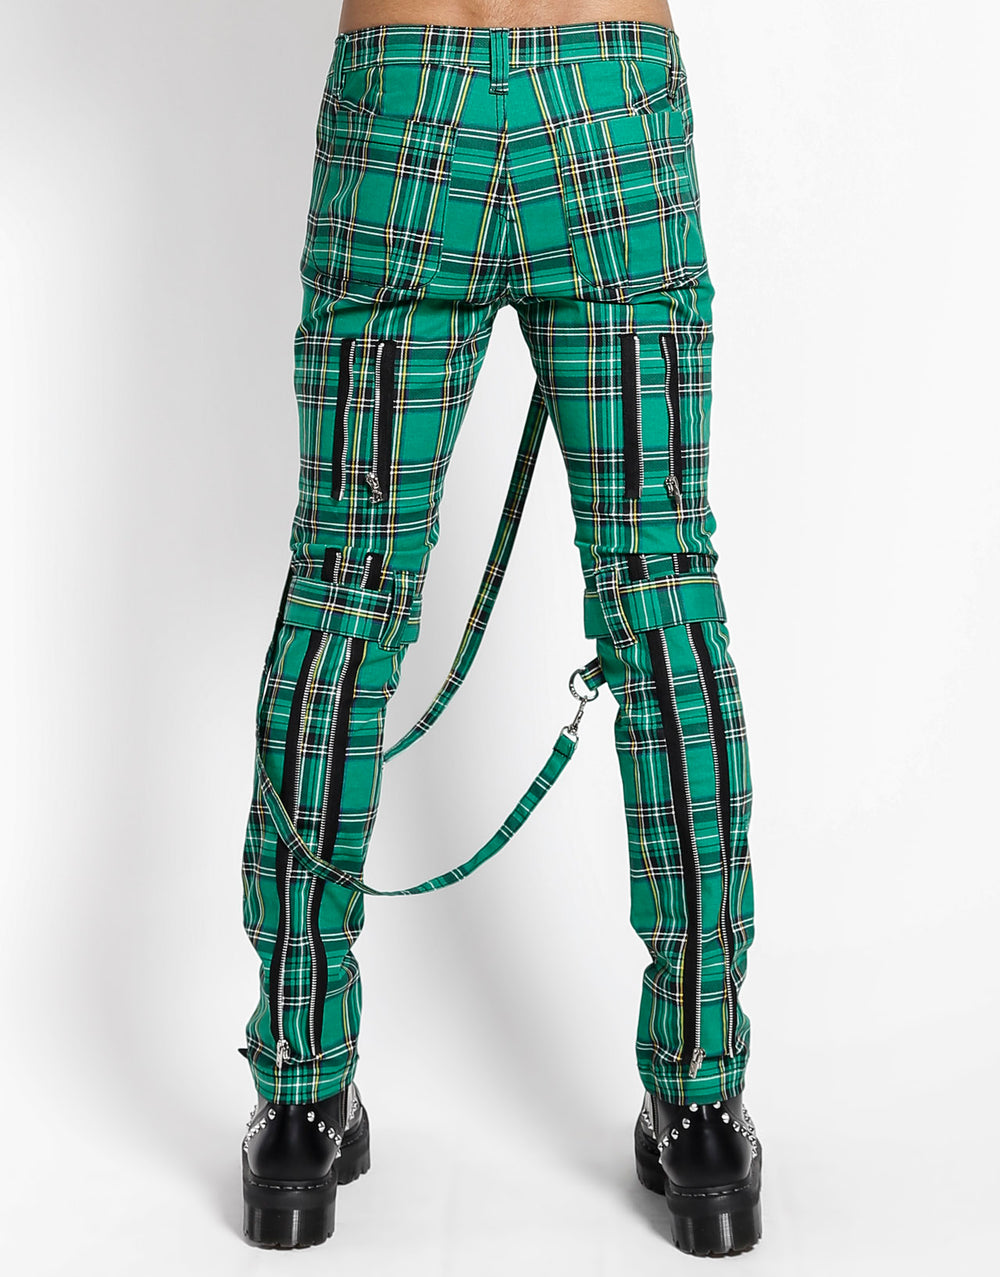 Green plaid pants on Pinterest